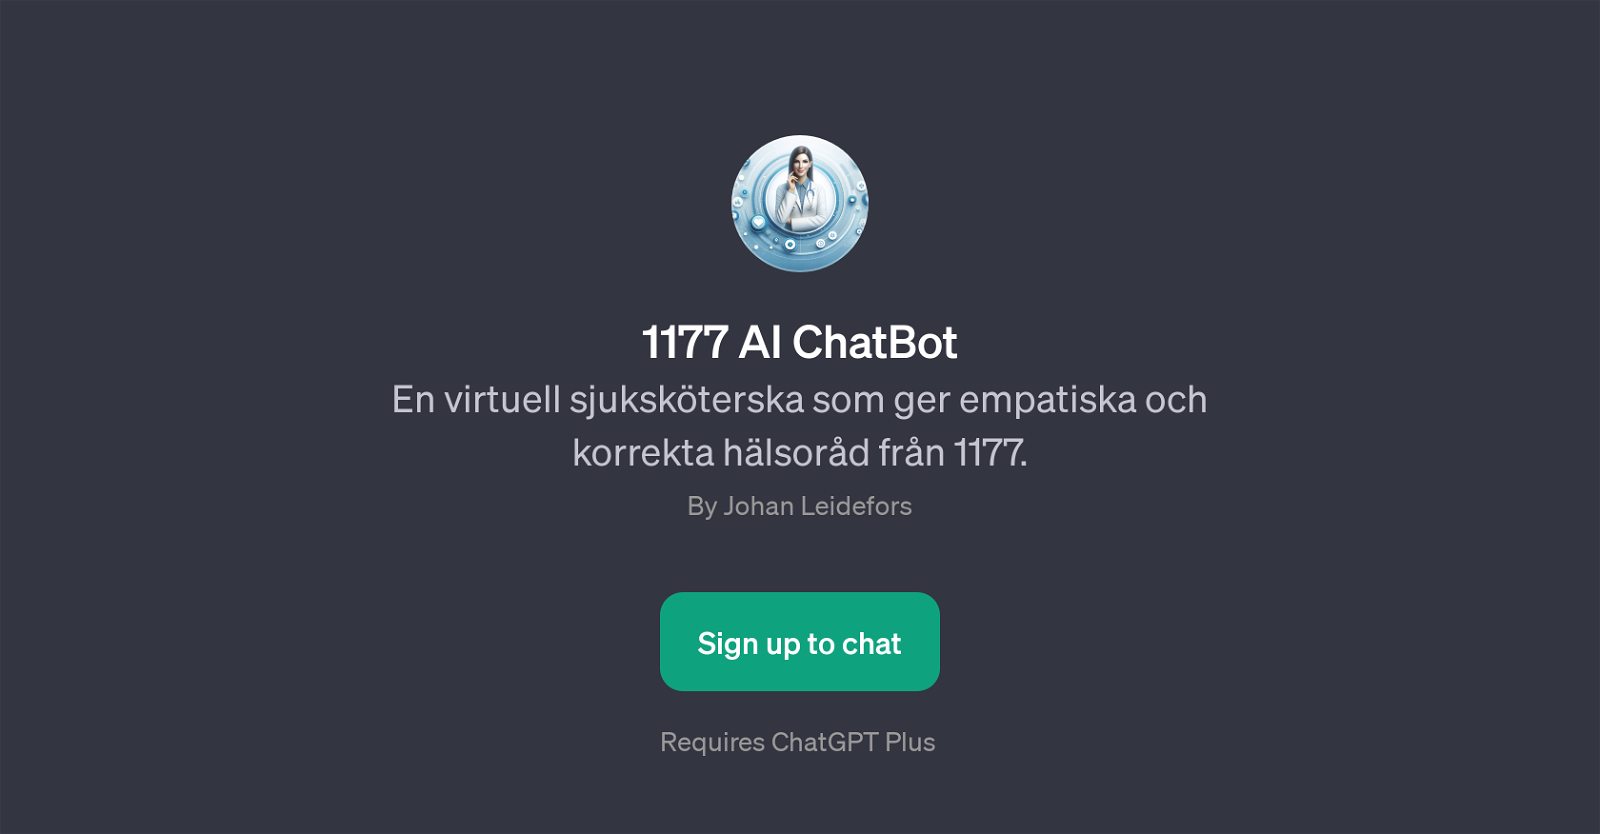 1177 AI ChatBot website